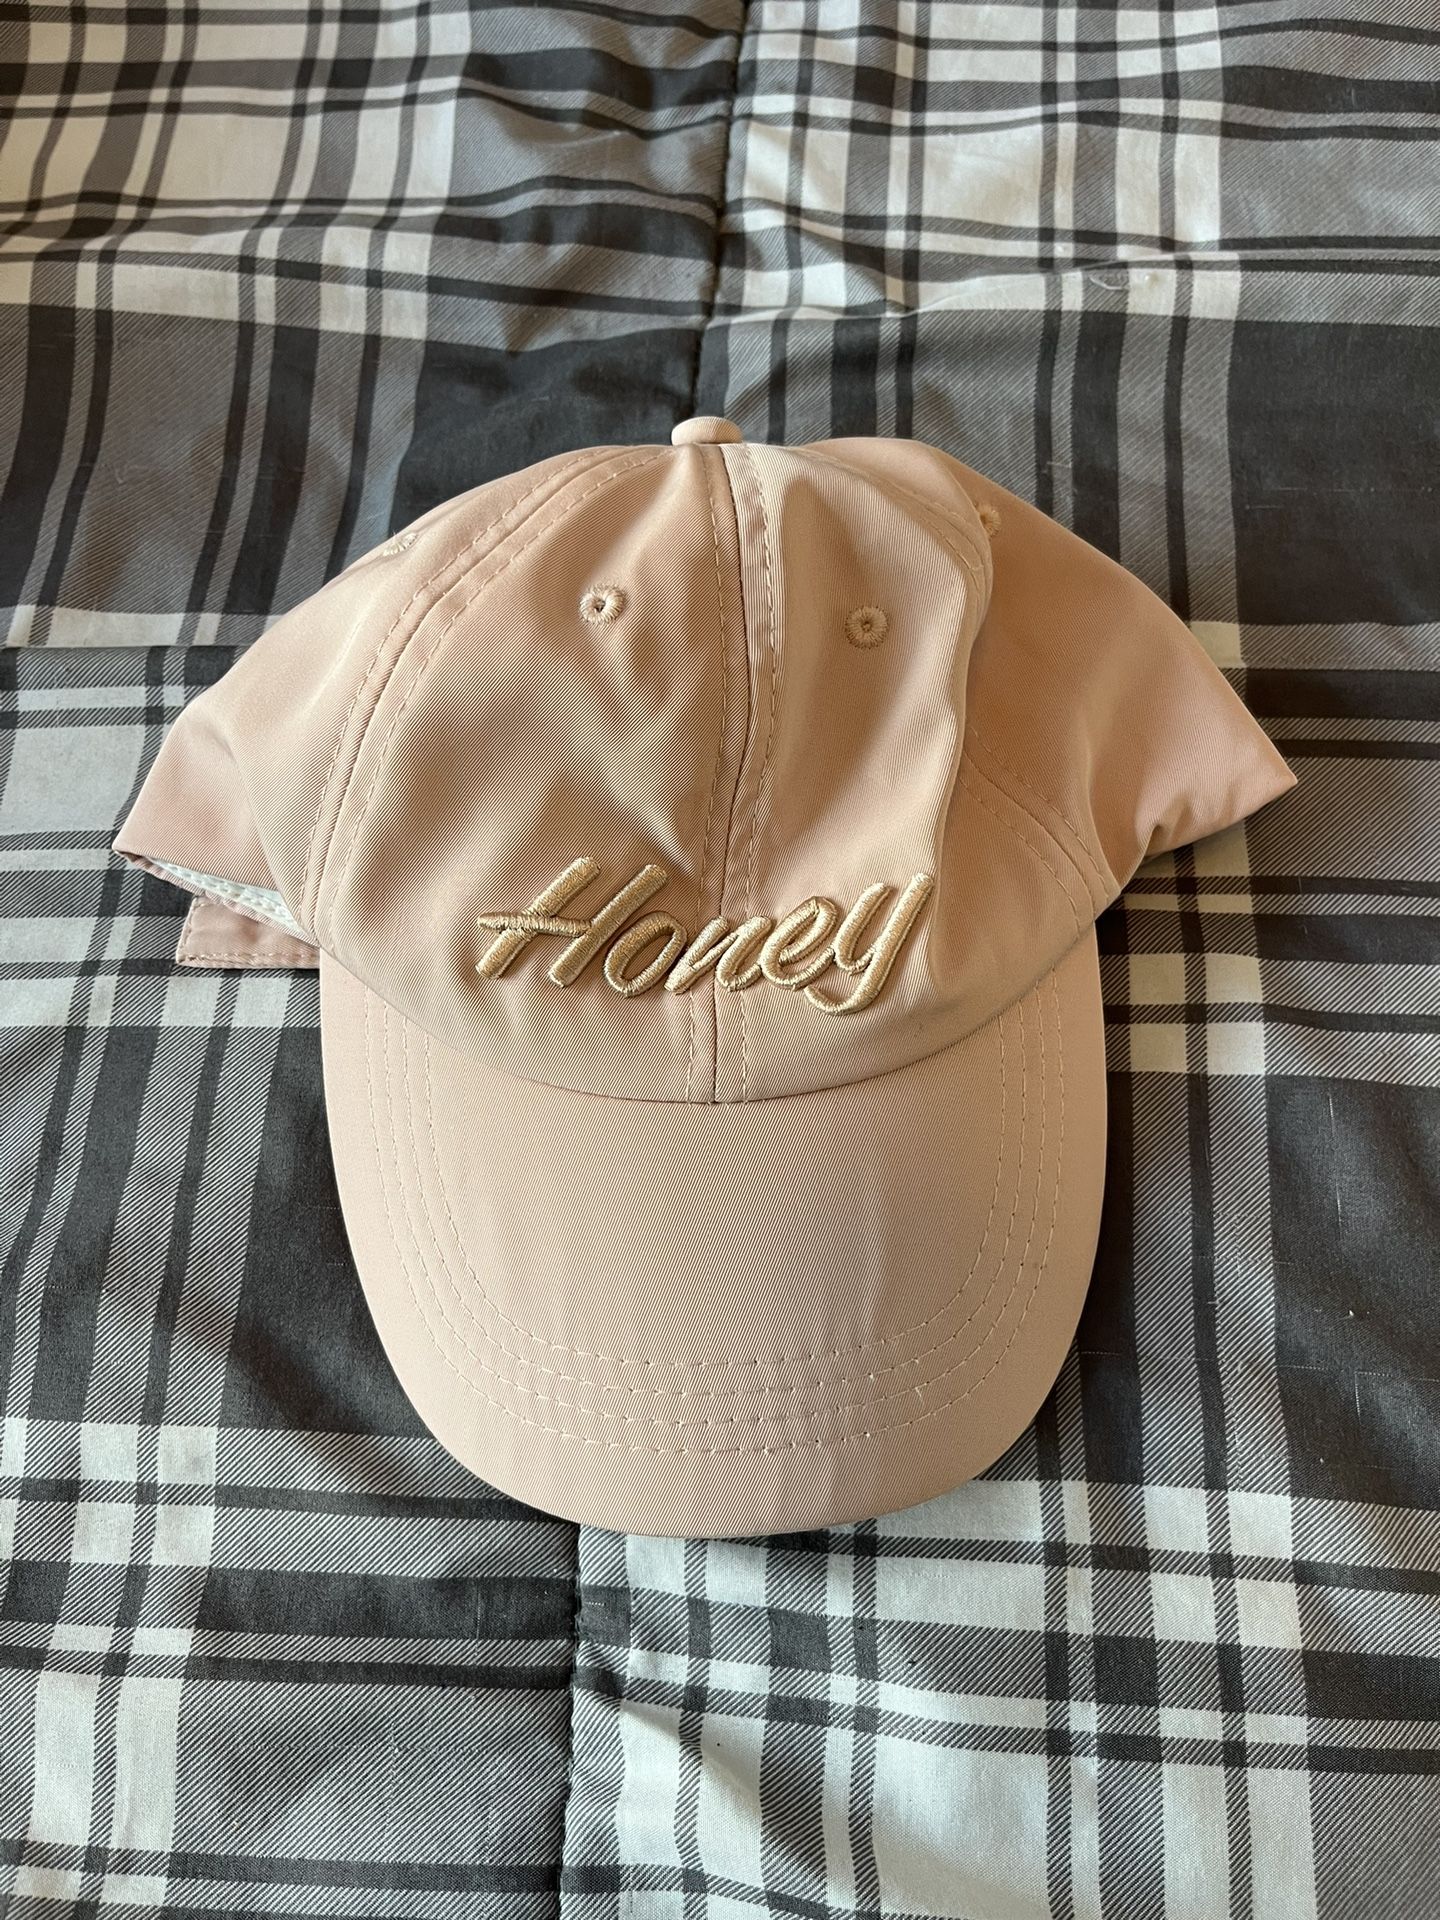 “Honey” hat